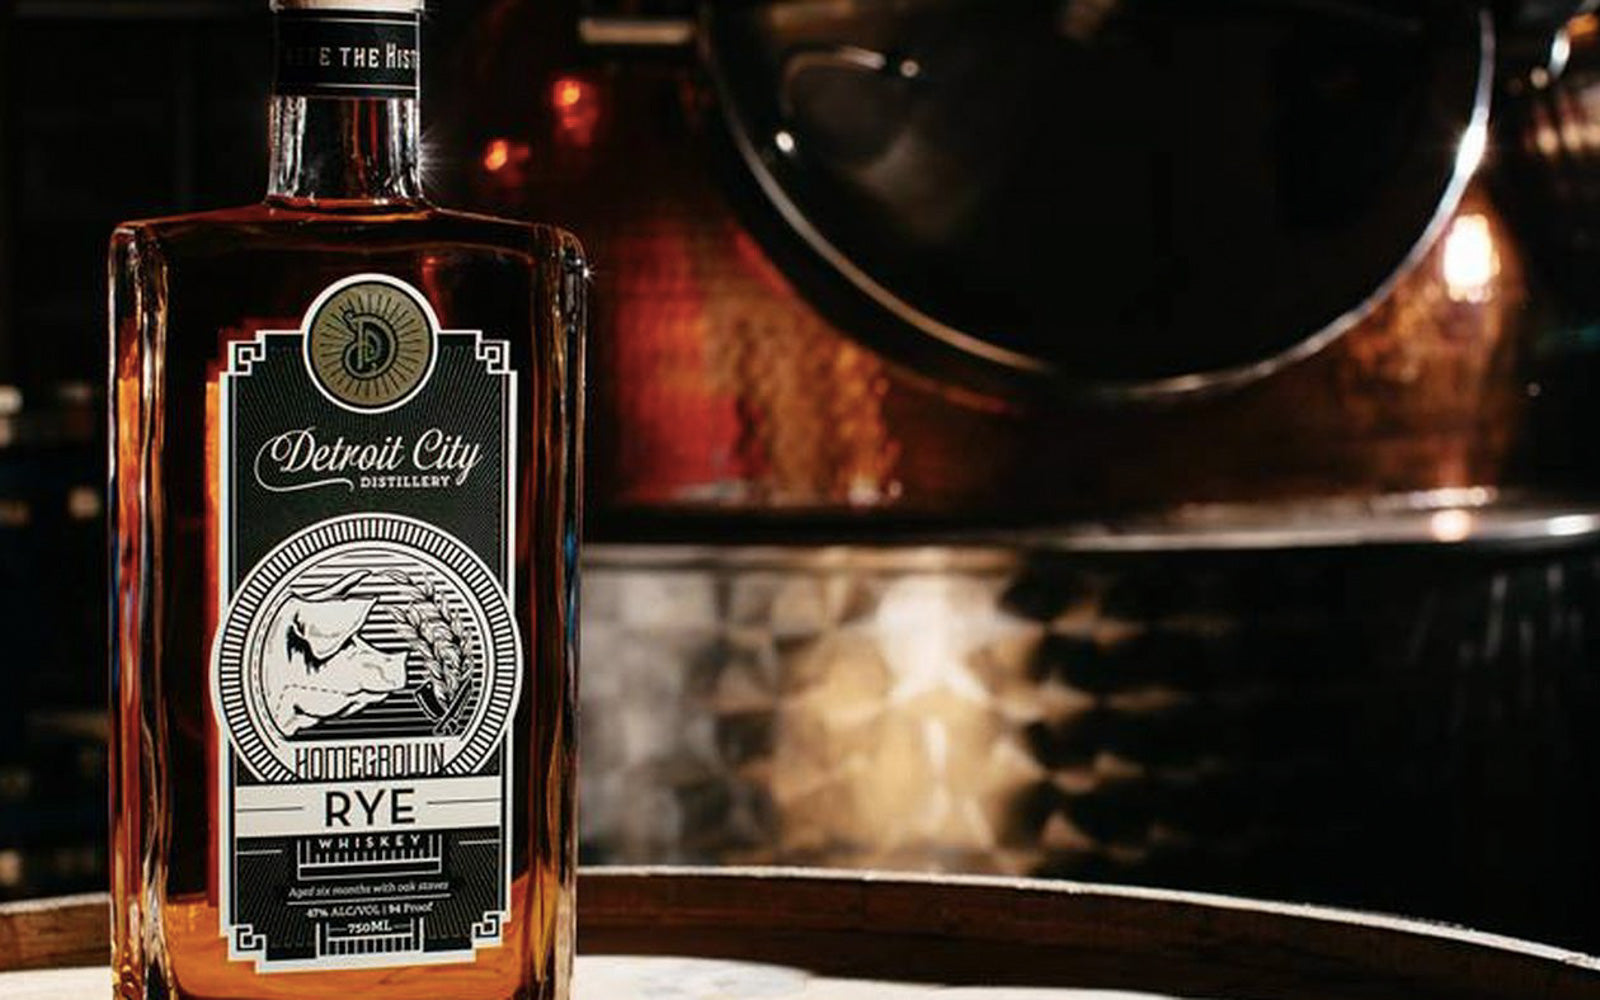 Detroit City Distillery HomeGrown Rye Whiskey